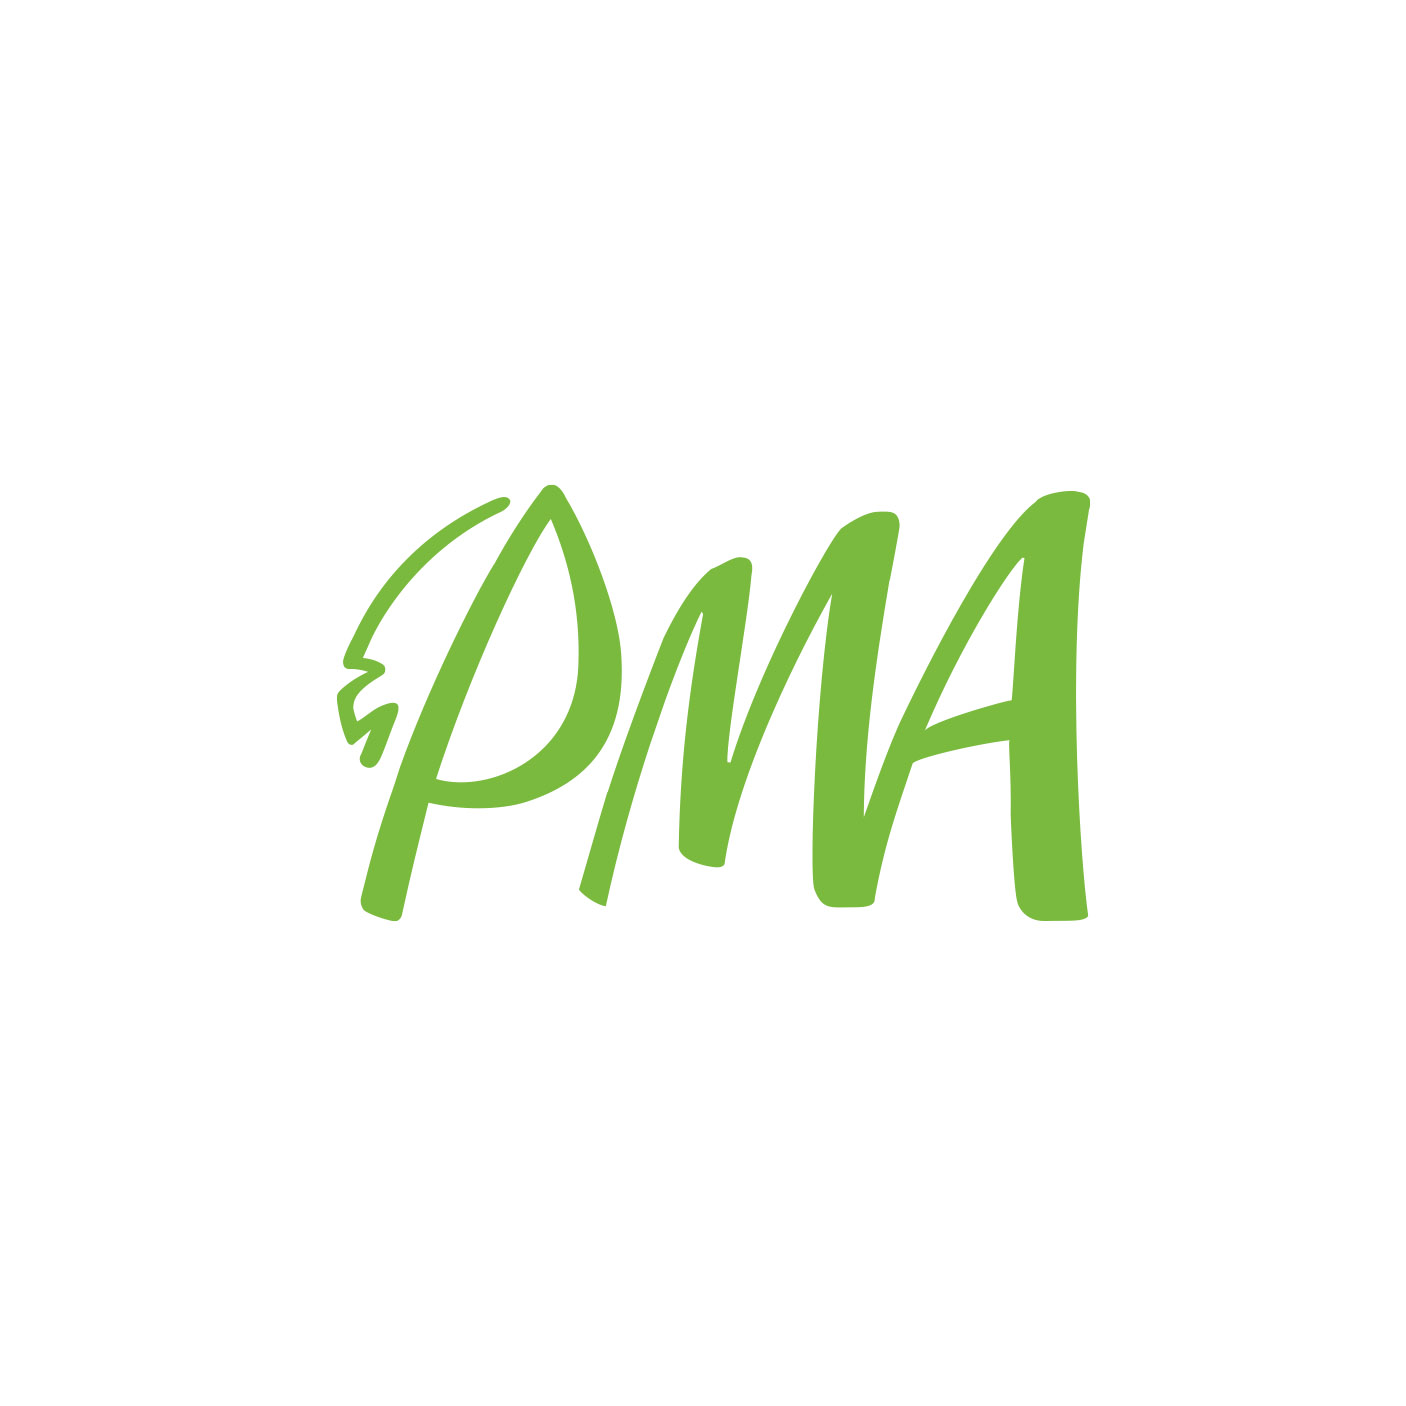 Branding and logo for PMA, the Produce Marketing Association trade organization.